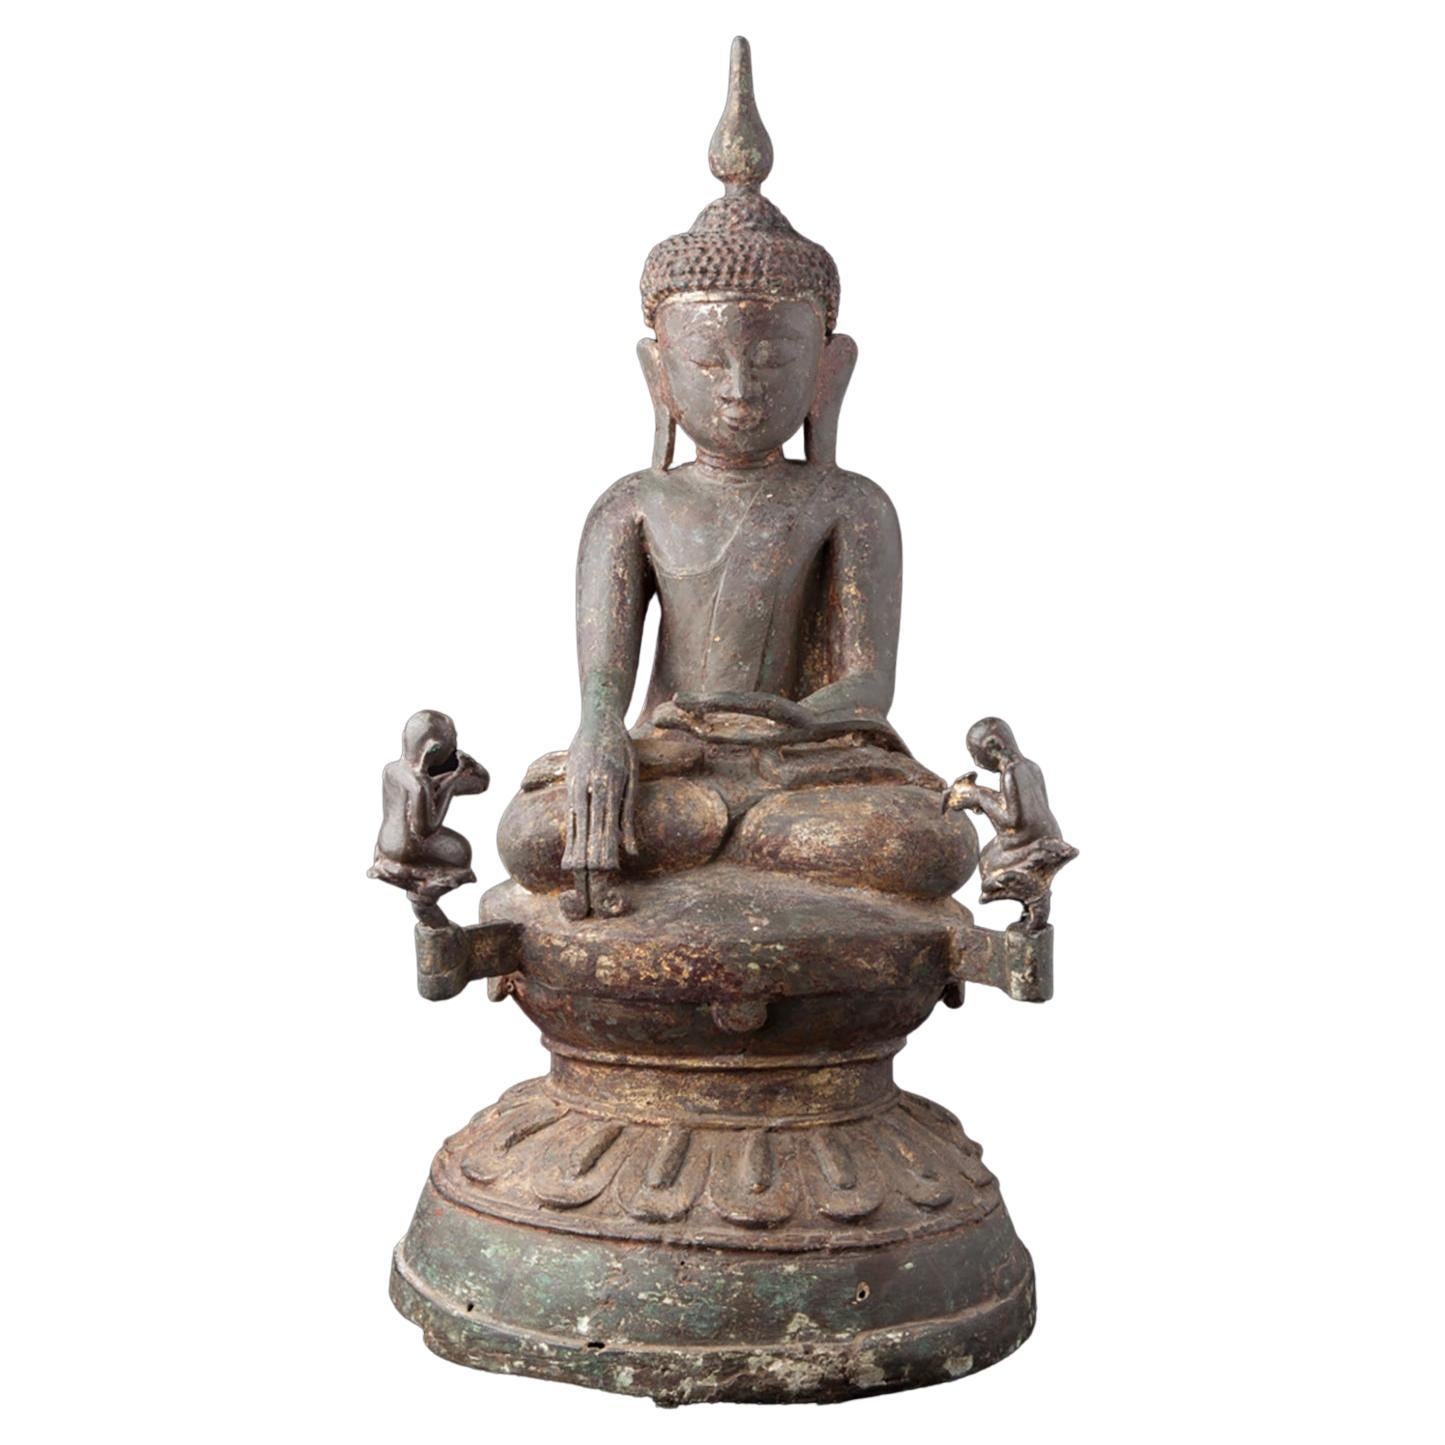 Speziale Ava-Buddha-Statue aus Bronze aus Birma aus dem 15.-16. Jahrhundert – Original Buddhas aus Birma